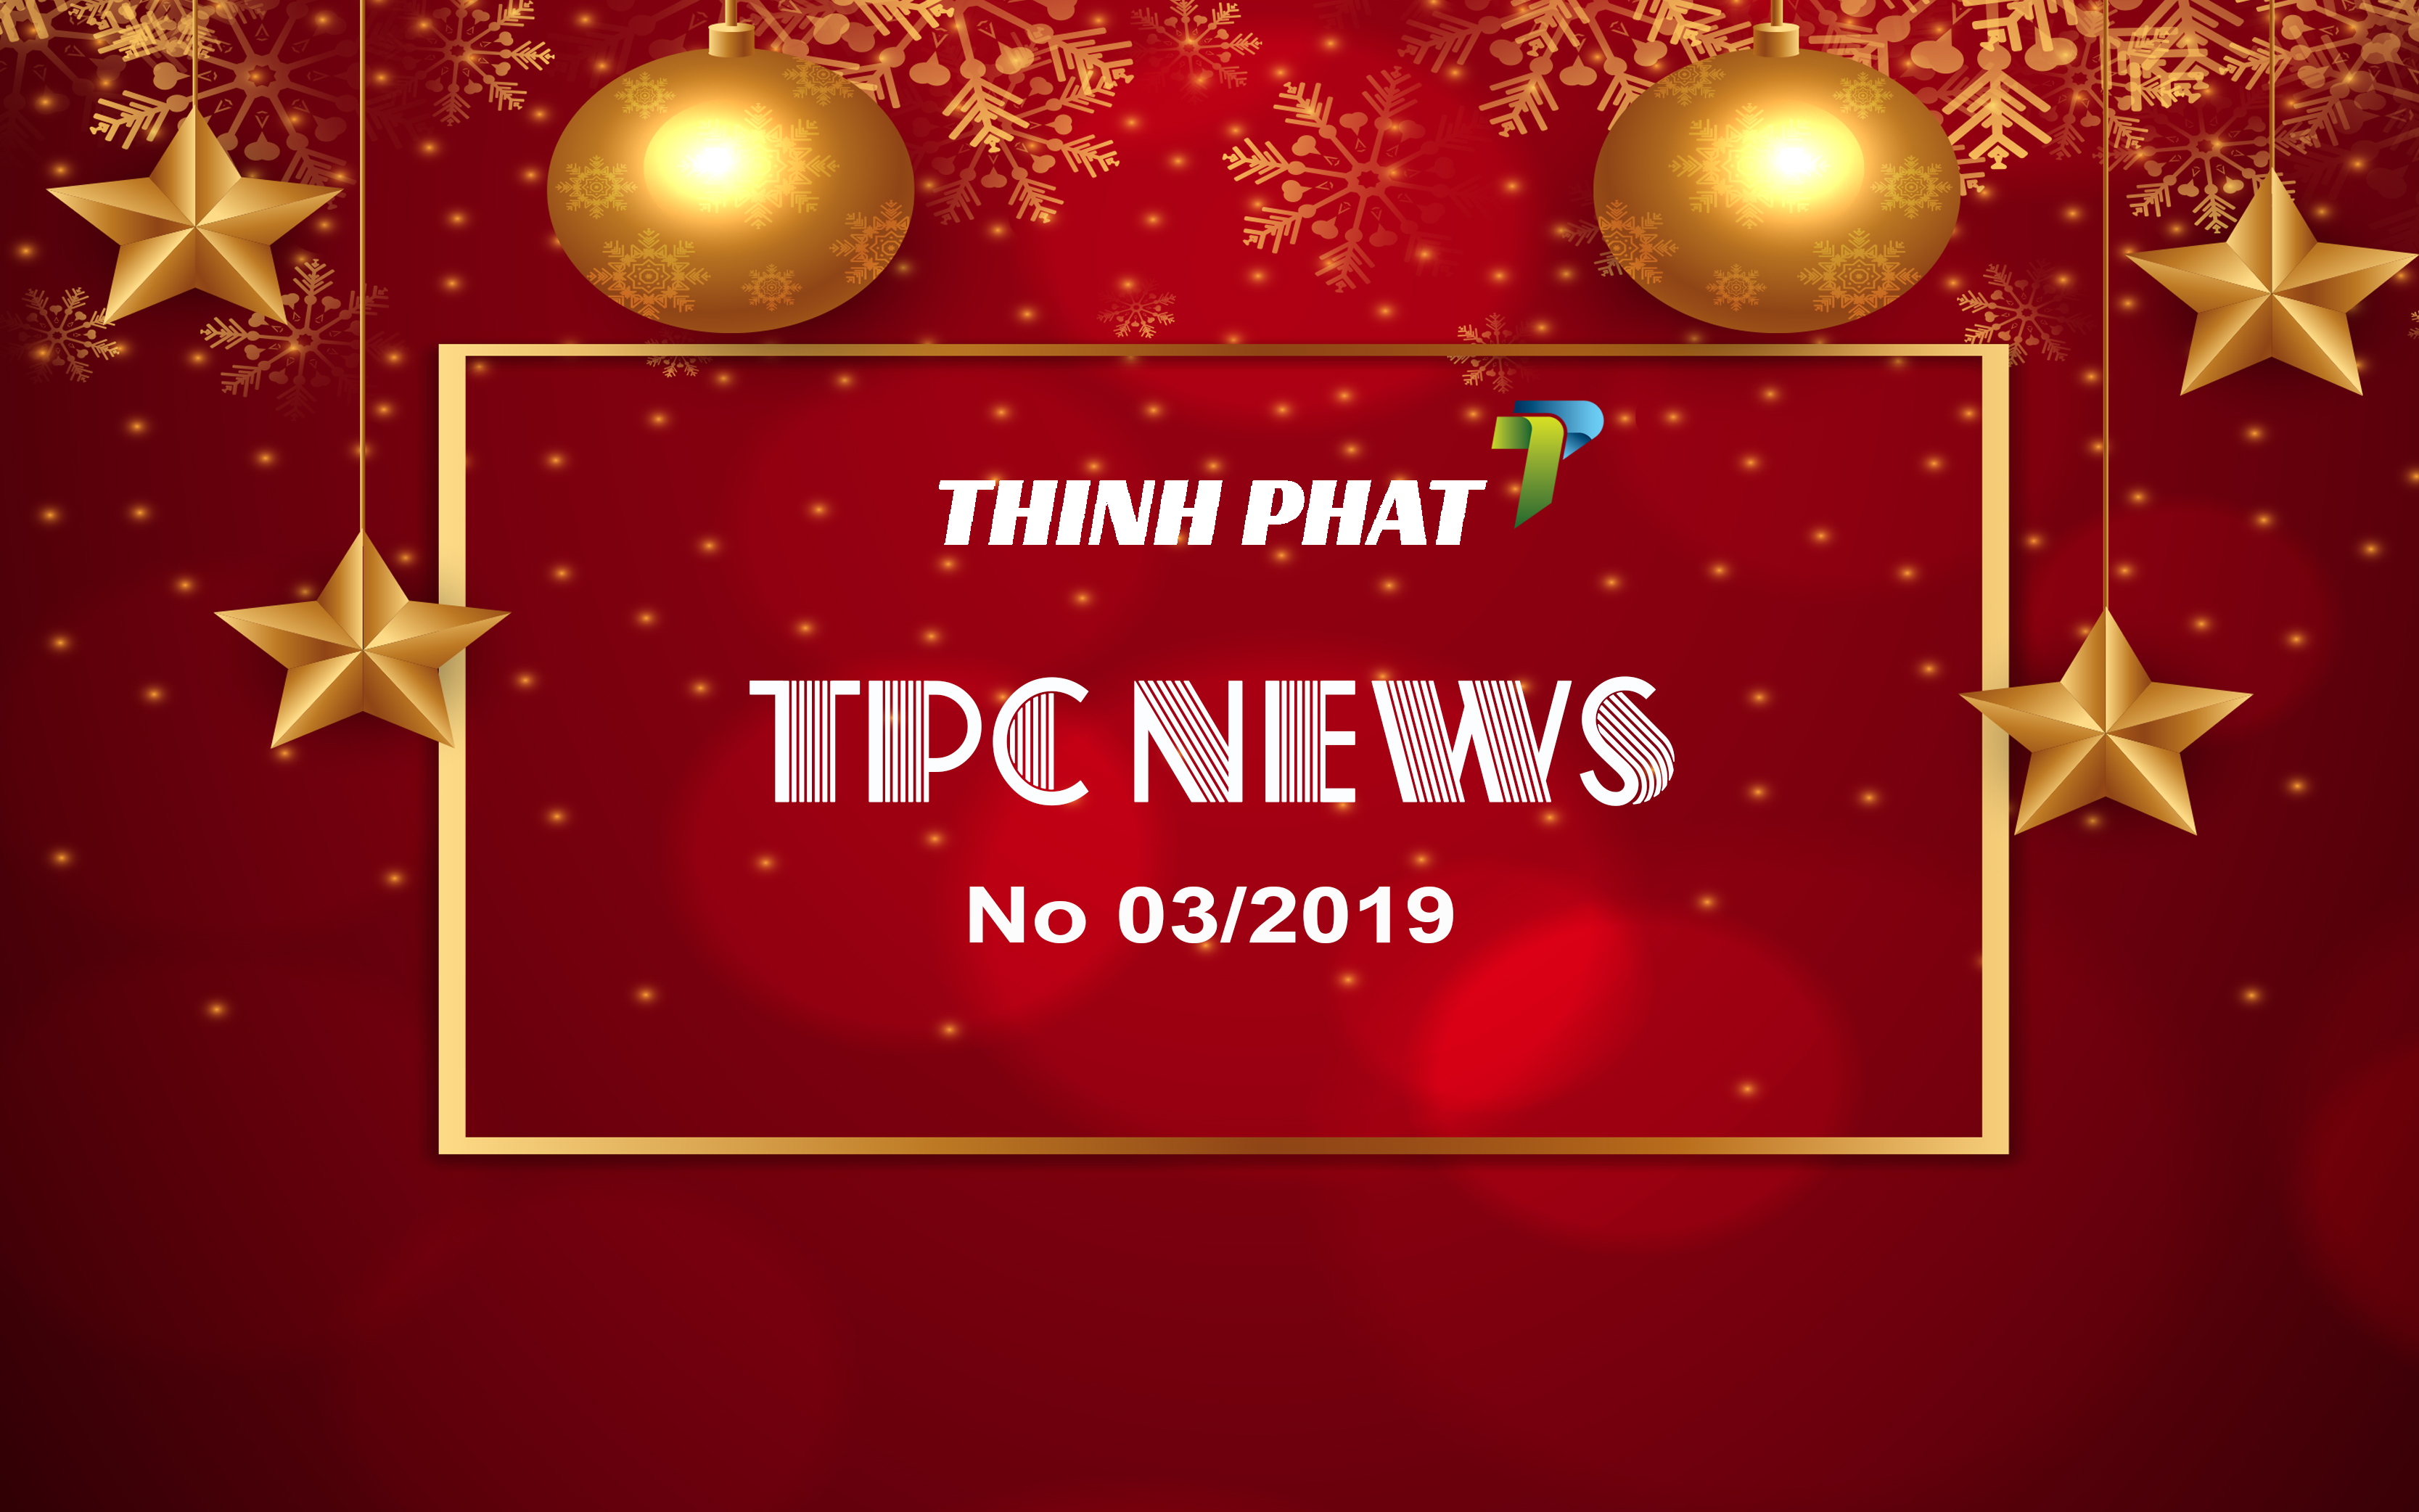 THINHPHAT NEWS NO 3